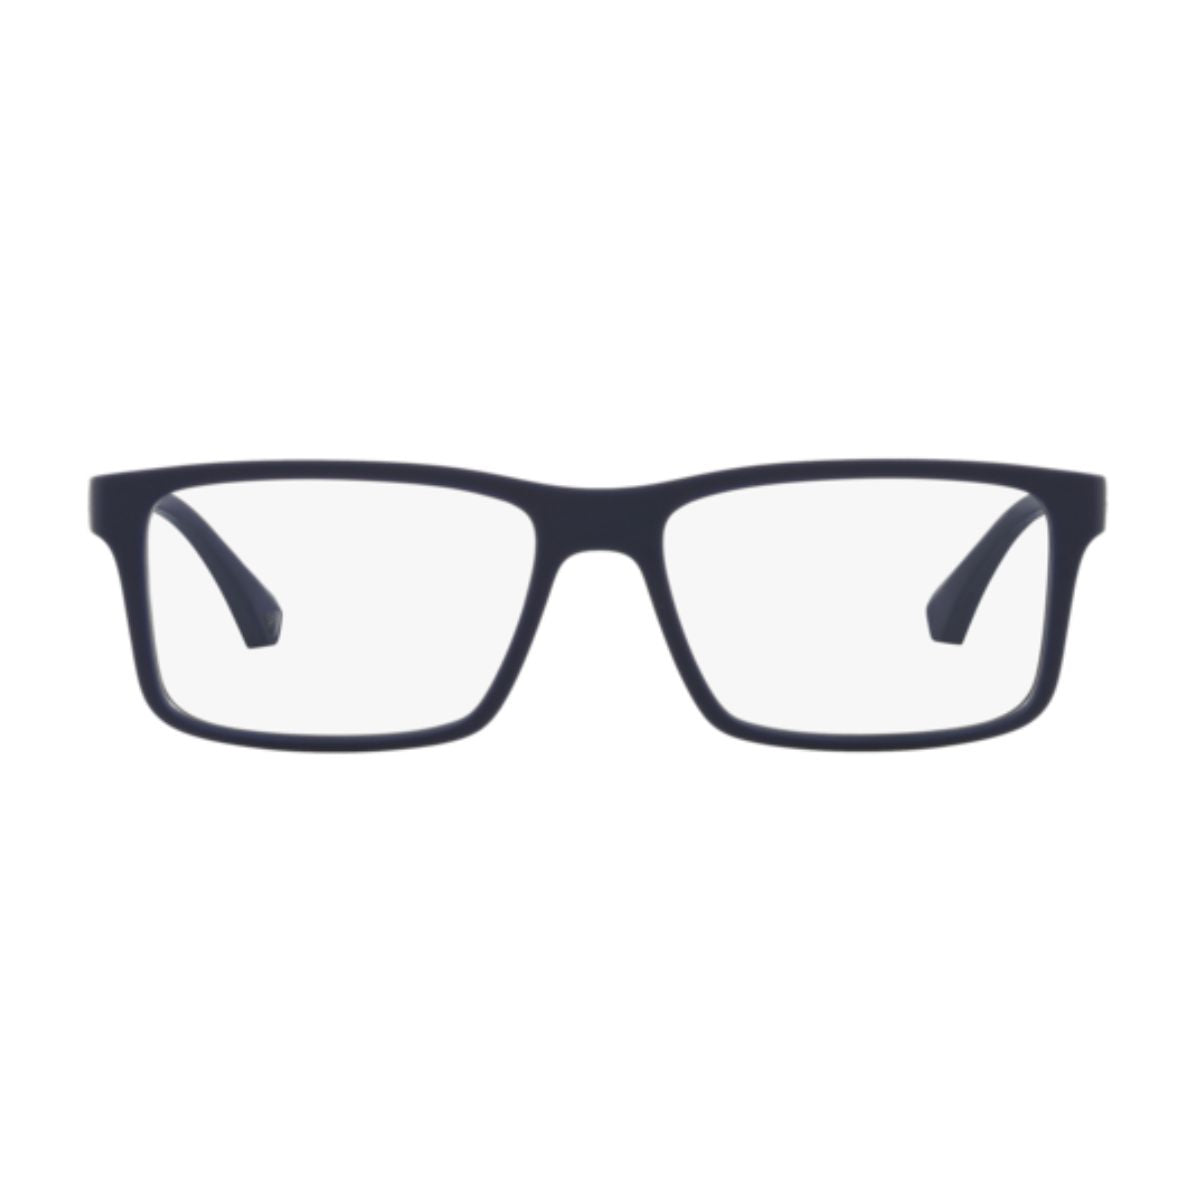 "Buy Emporio Armani 3038 5754 Optical Eyeglasses Frame For Men's At Optorium"